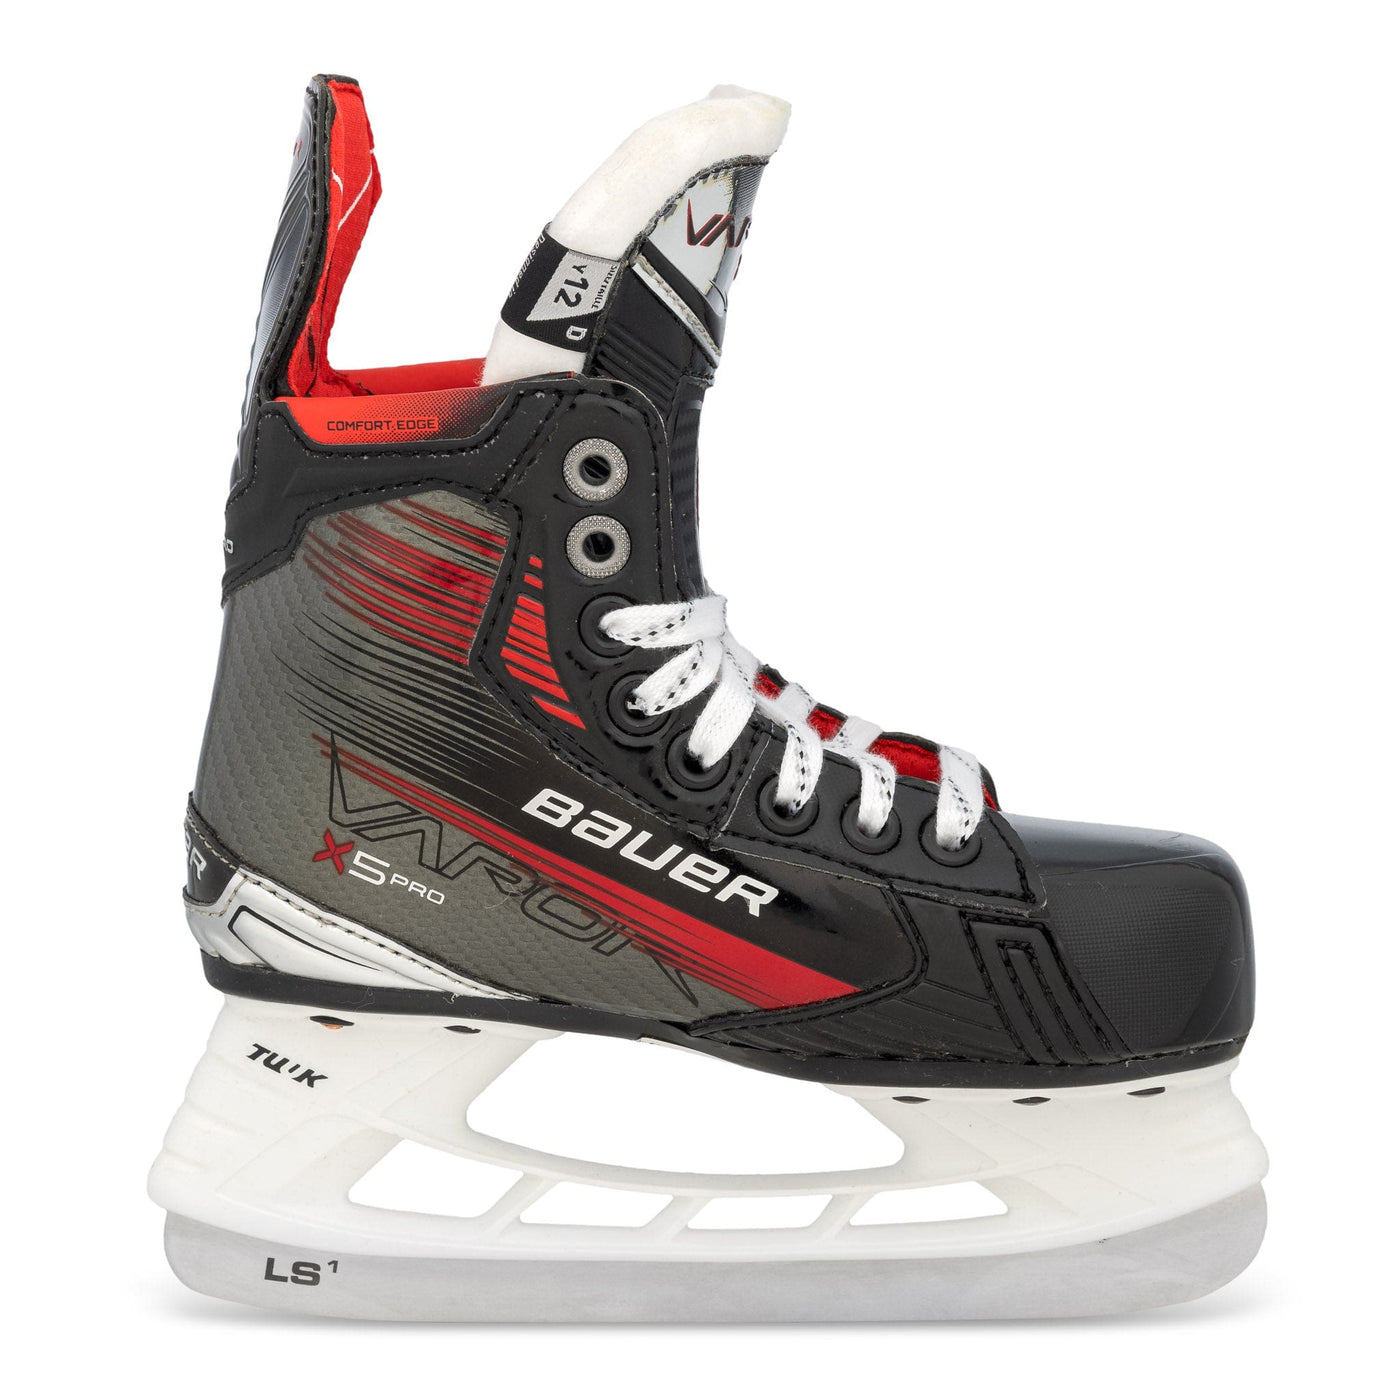 Bauer Vapor X5 Pro Youth Hockey Skates - The Hockey Shop Source For Sports